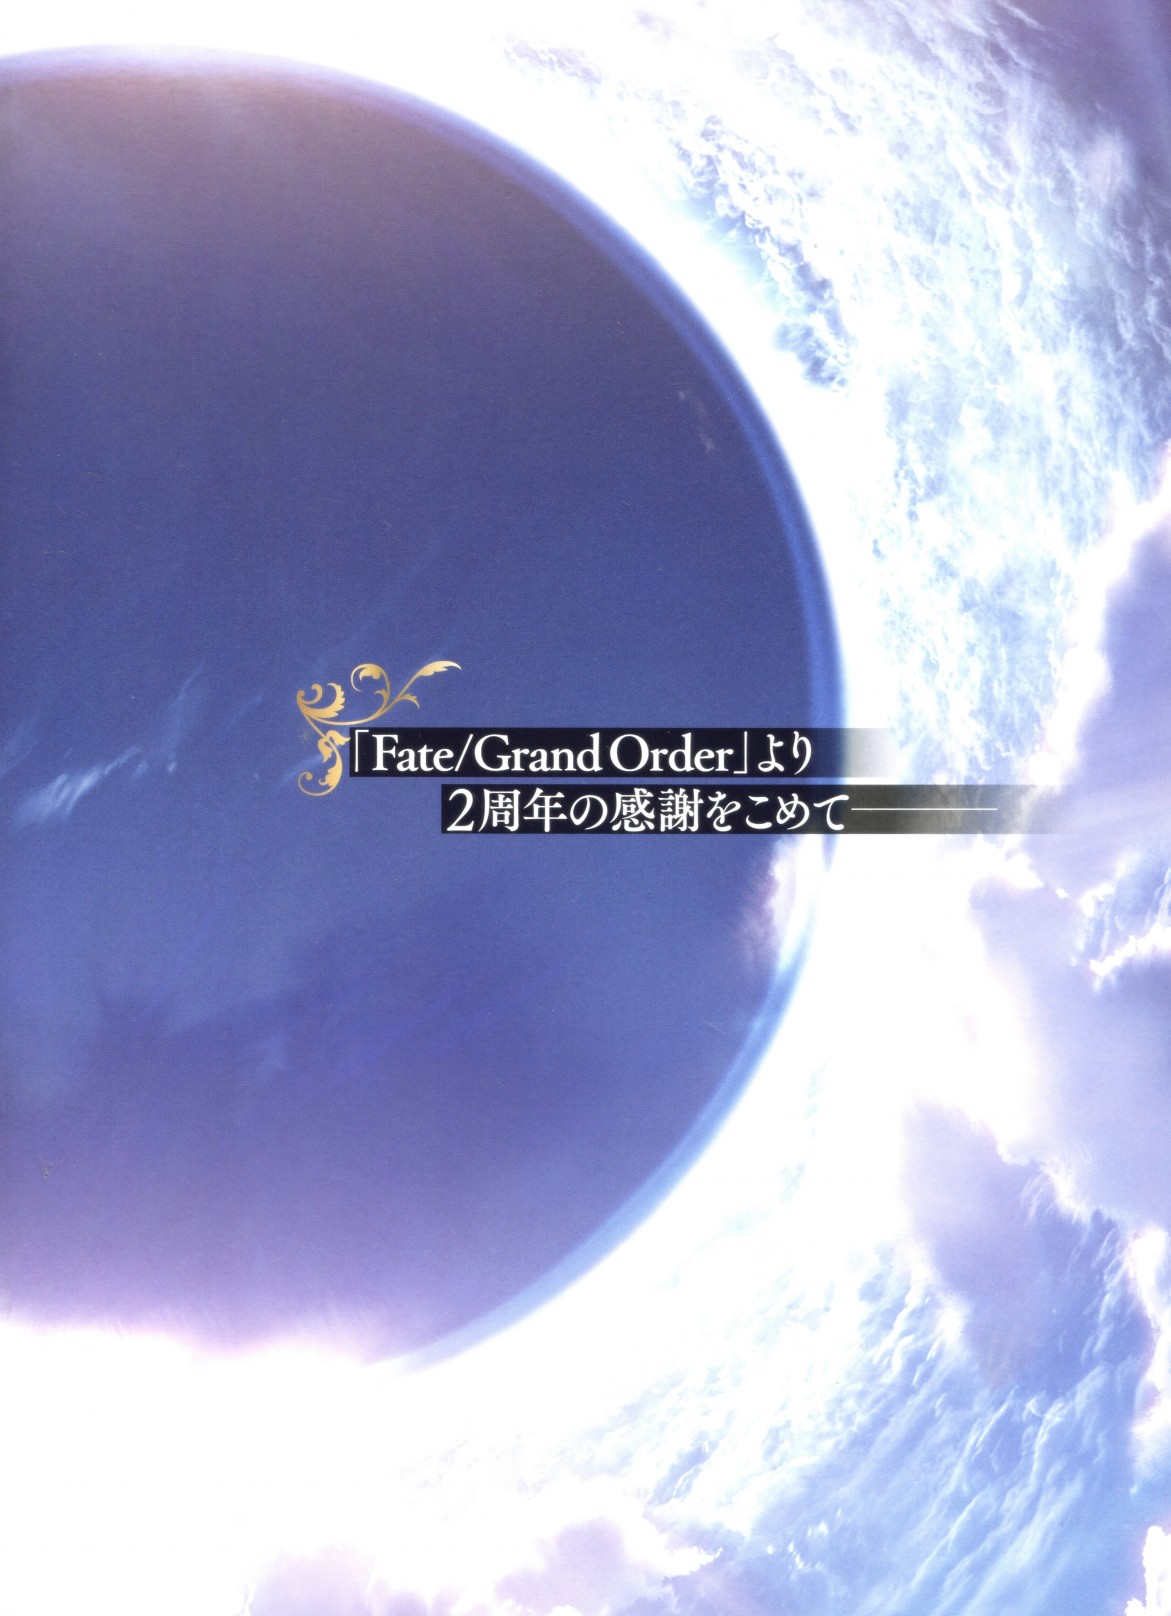 Fate Grand Order 2nd Anniversary ALBUM - 第1話(1/2) - 2